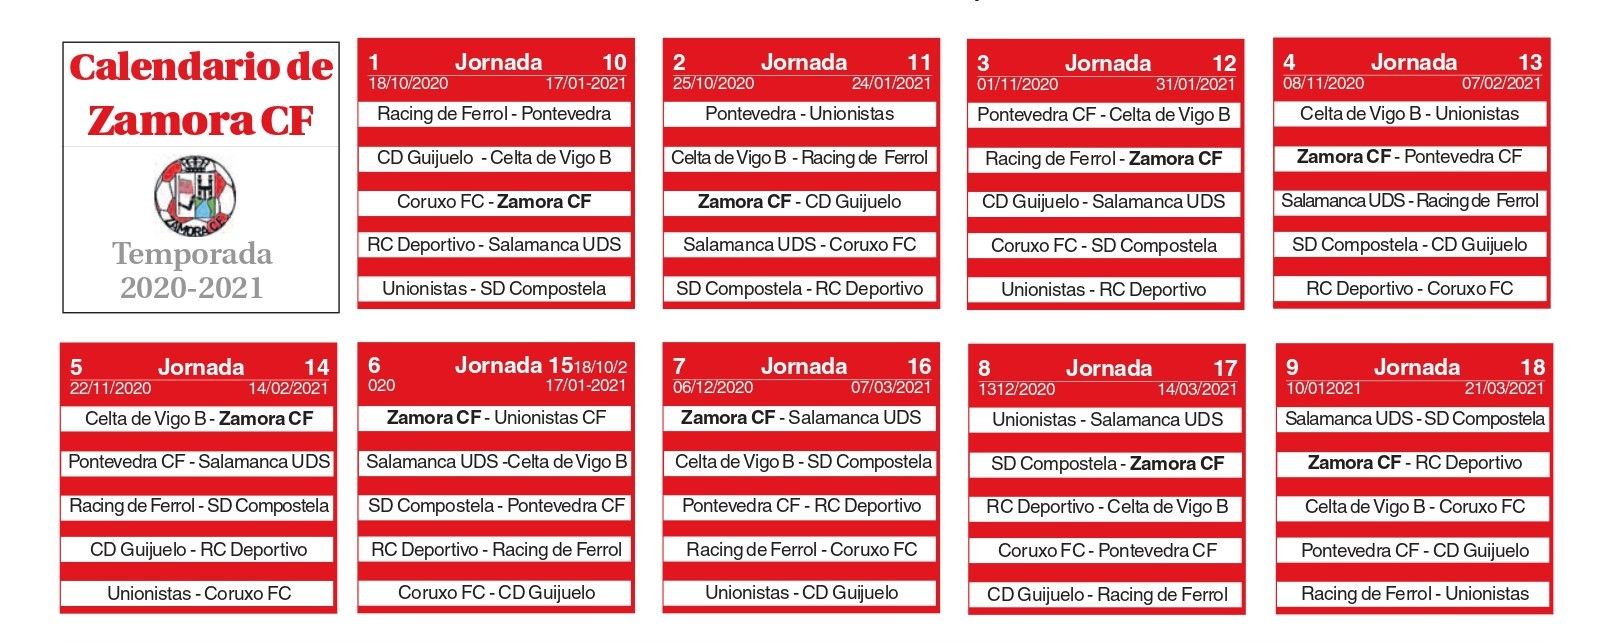 Calendario del Zamora CF 2020/2021 en Segunda B.